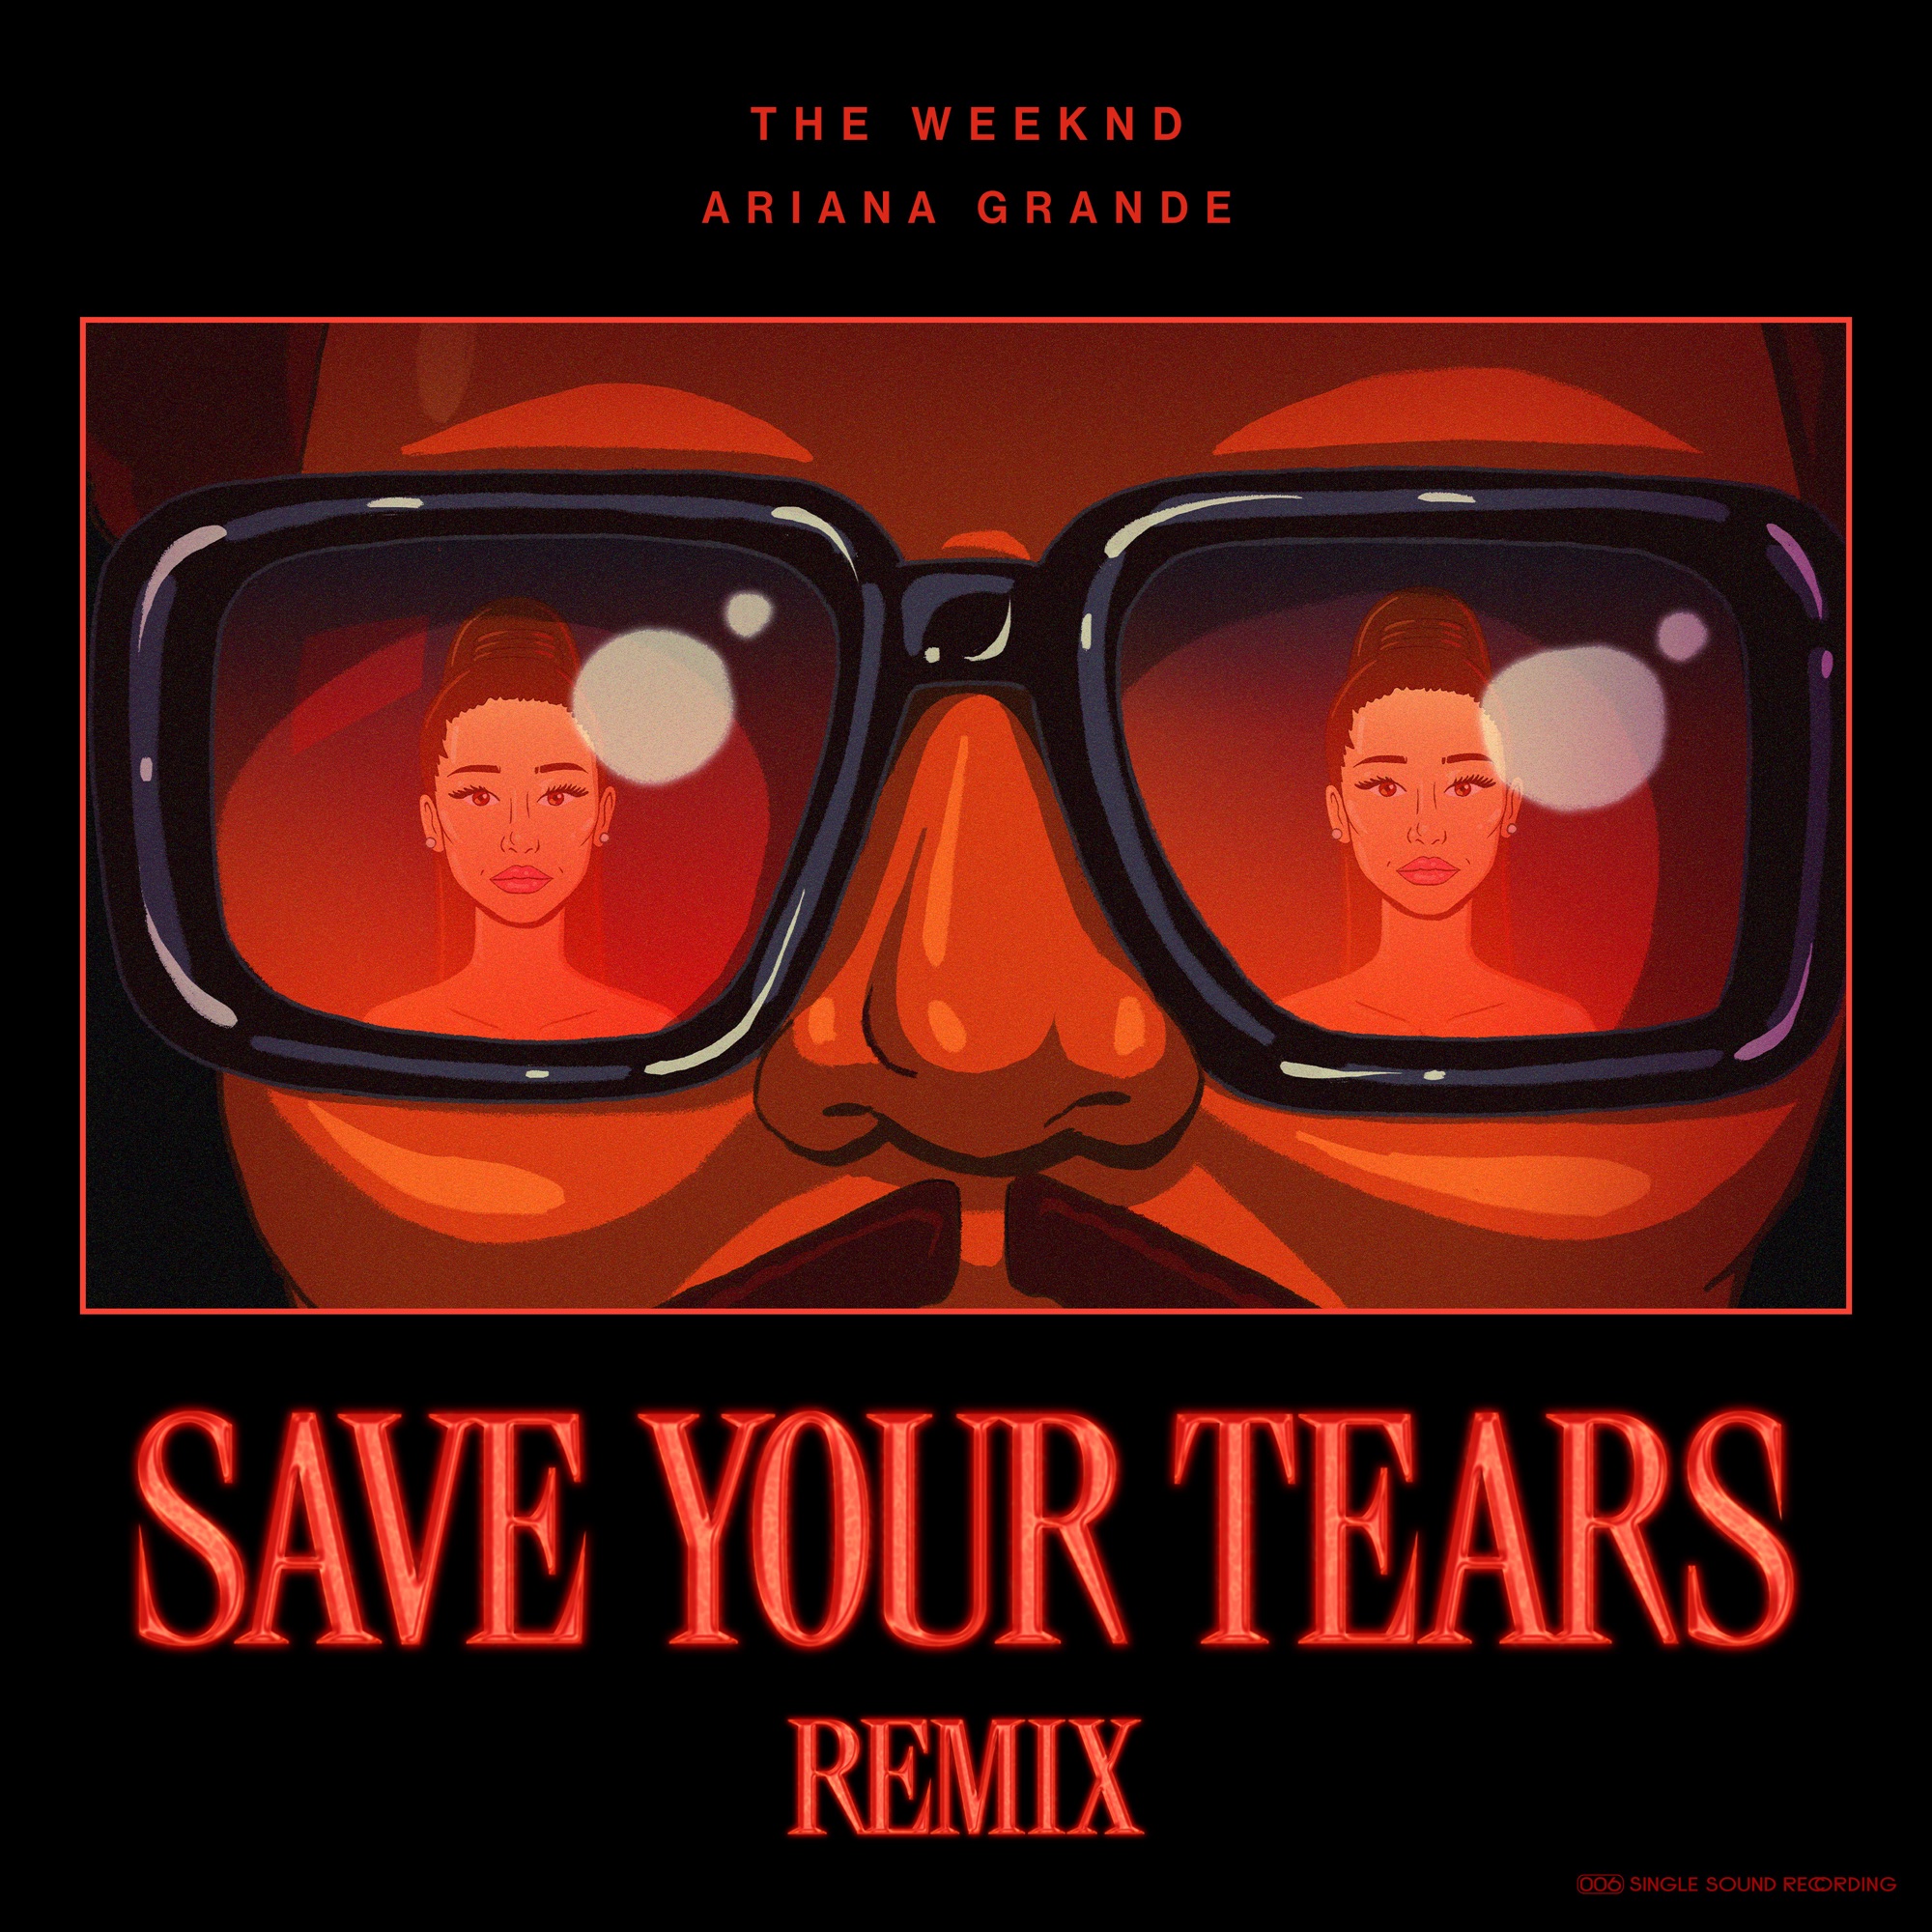 The Weeknd & Ariana Grande - Save Your Tears (Remix) - Single